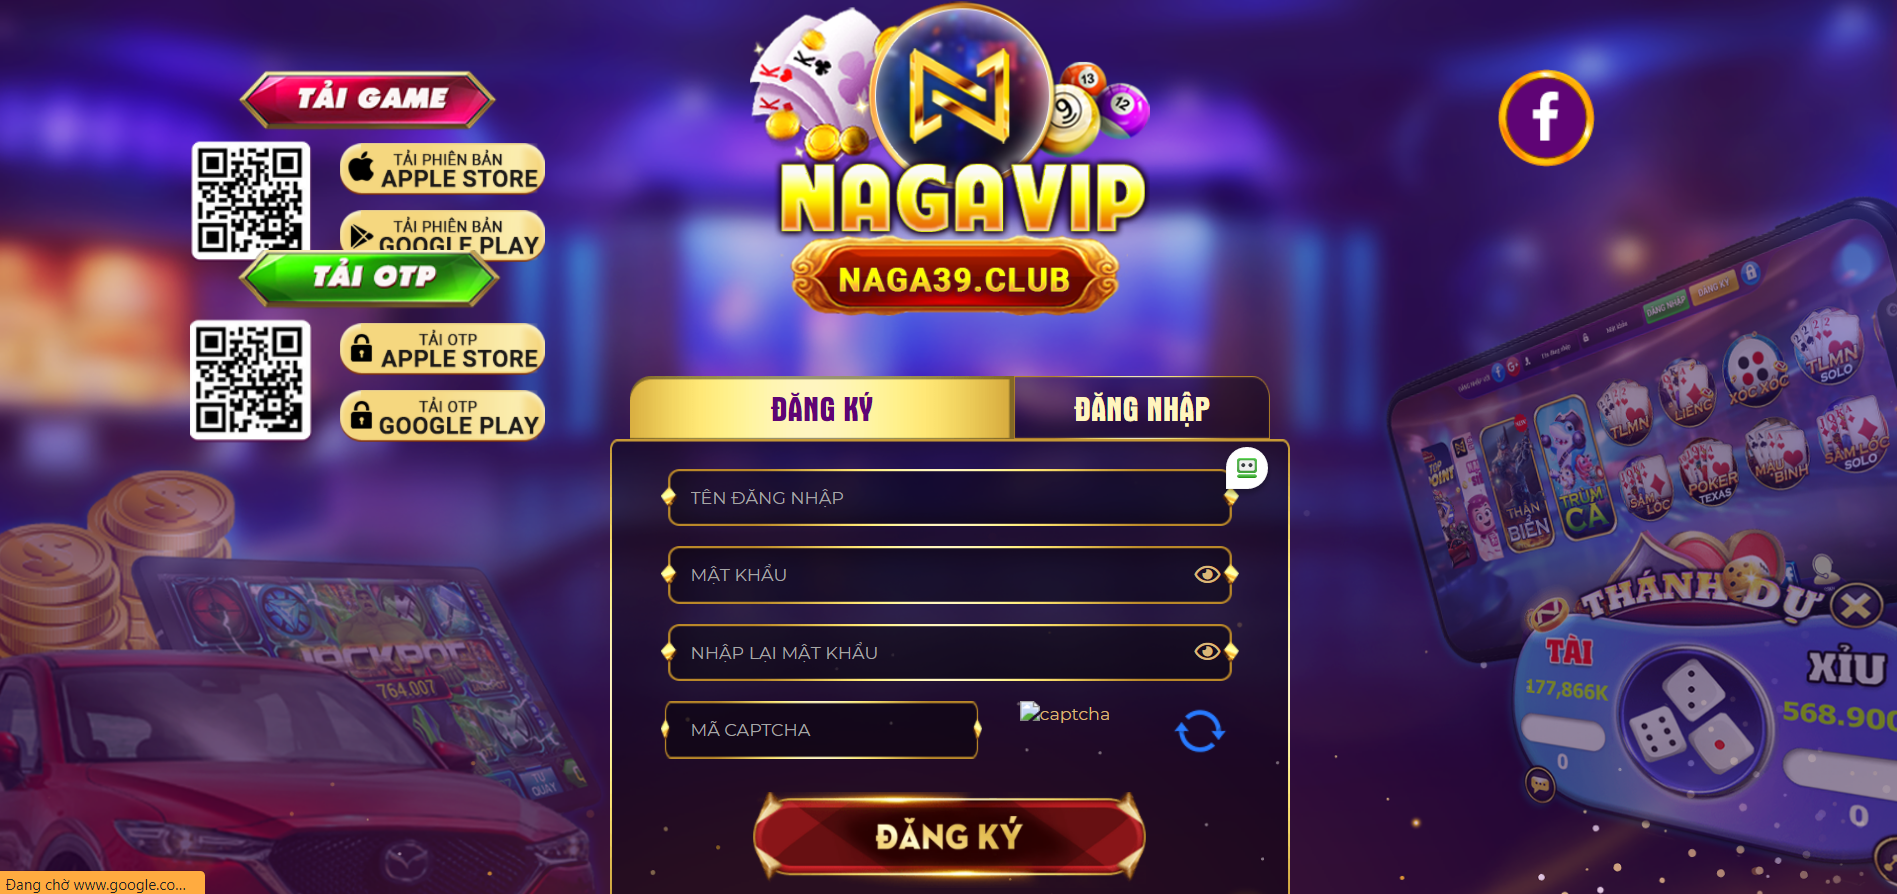 nagavip club, nagavip39.club 3